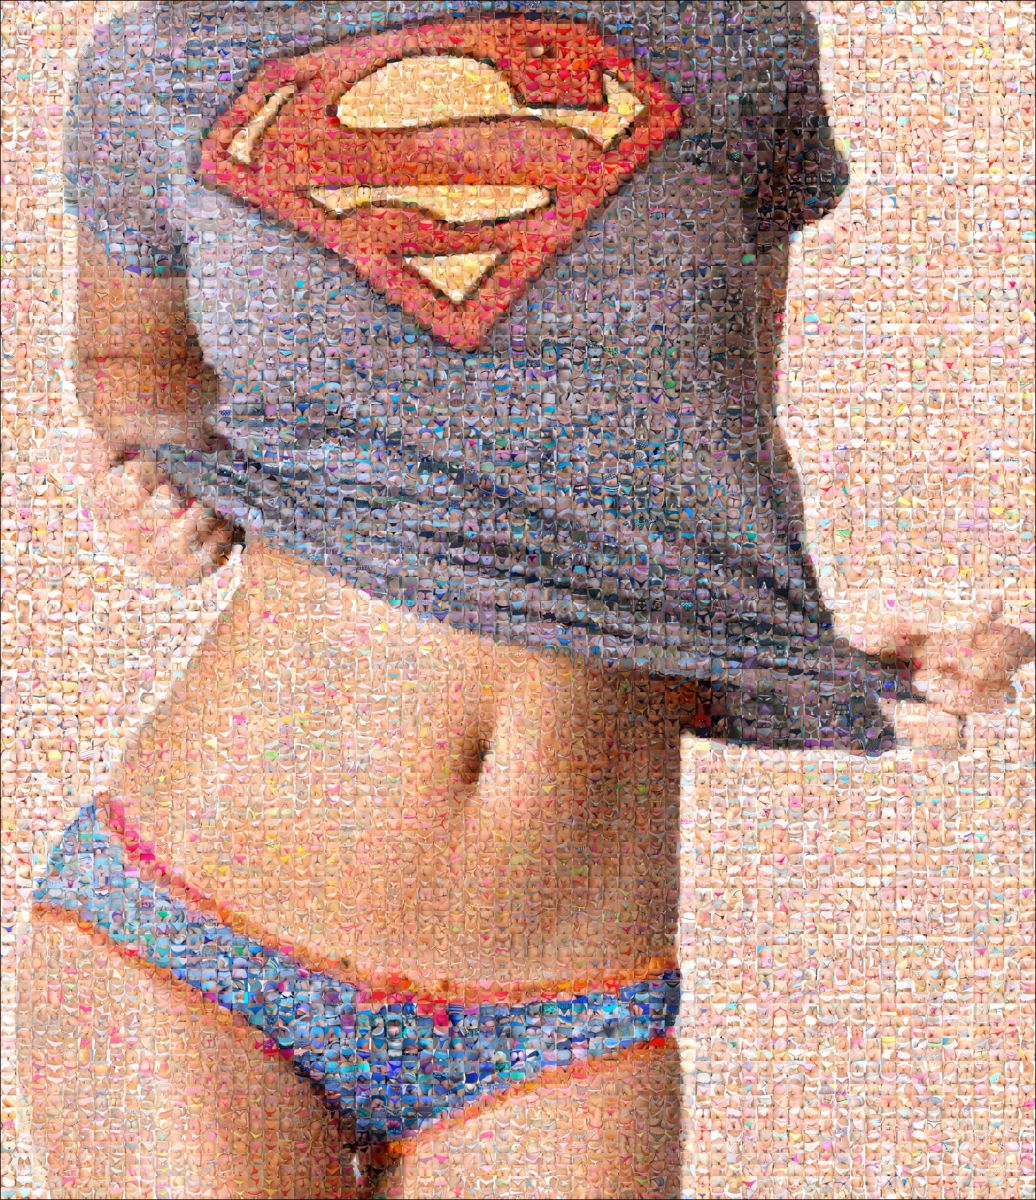 Superwoman 